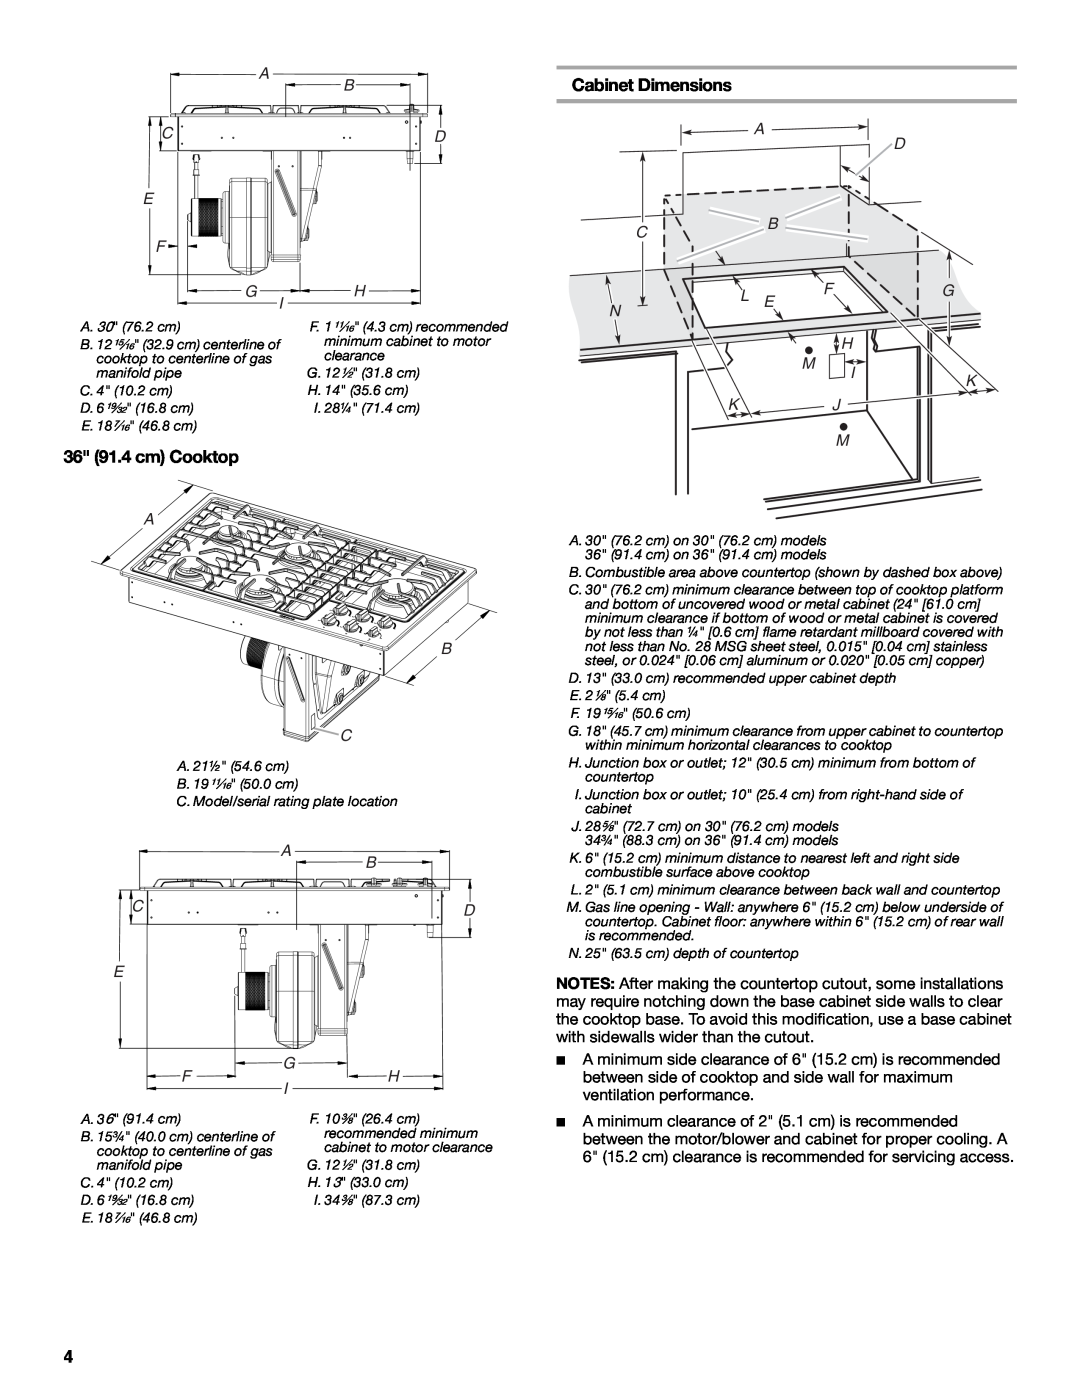 Jenn-Air W10526080A installation instructions 36 91.4 cm Cooktop, Cabinet Dimensions, A B C, A D Cb, K J M 